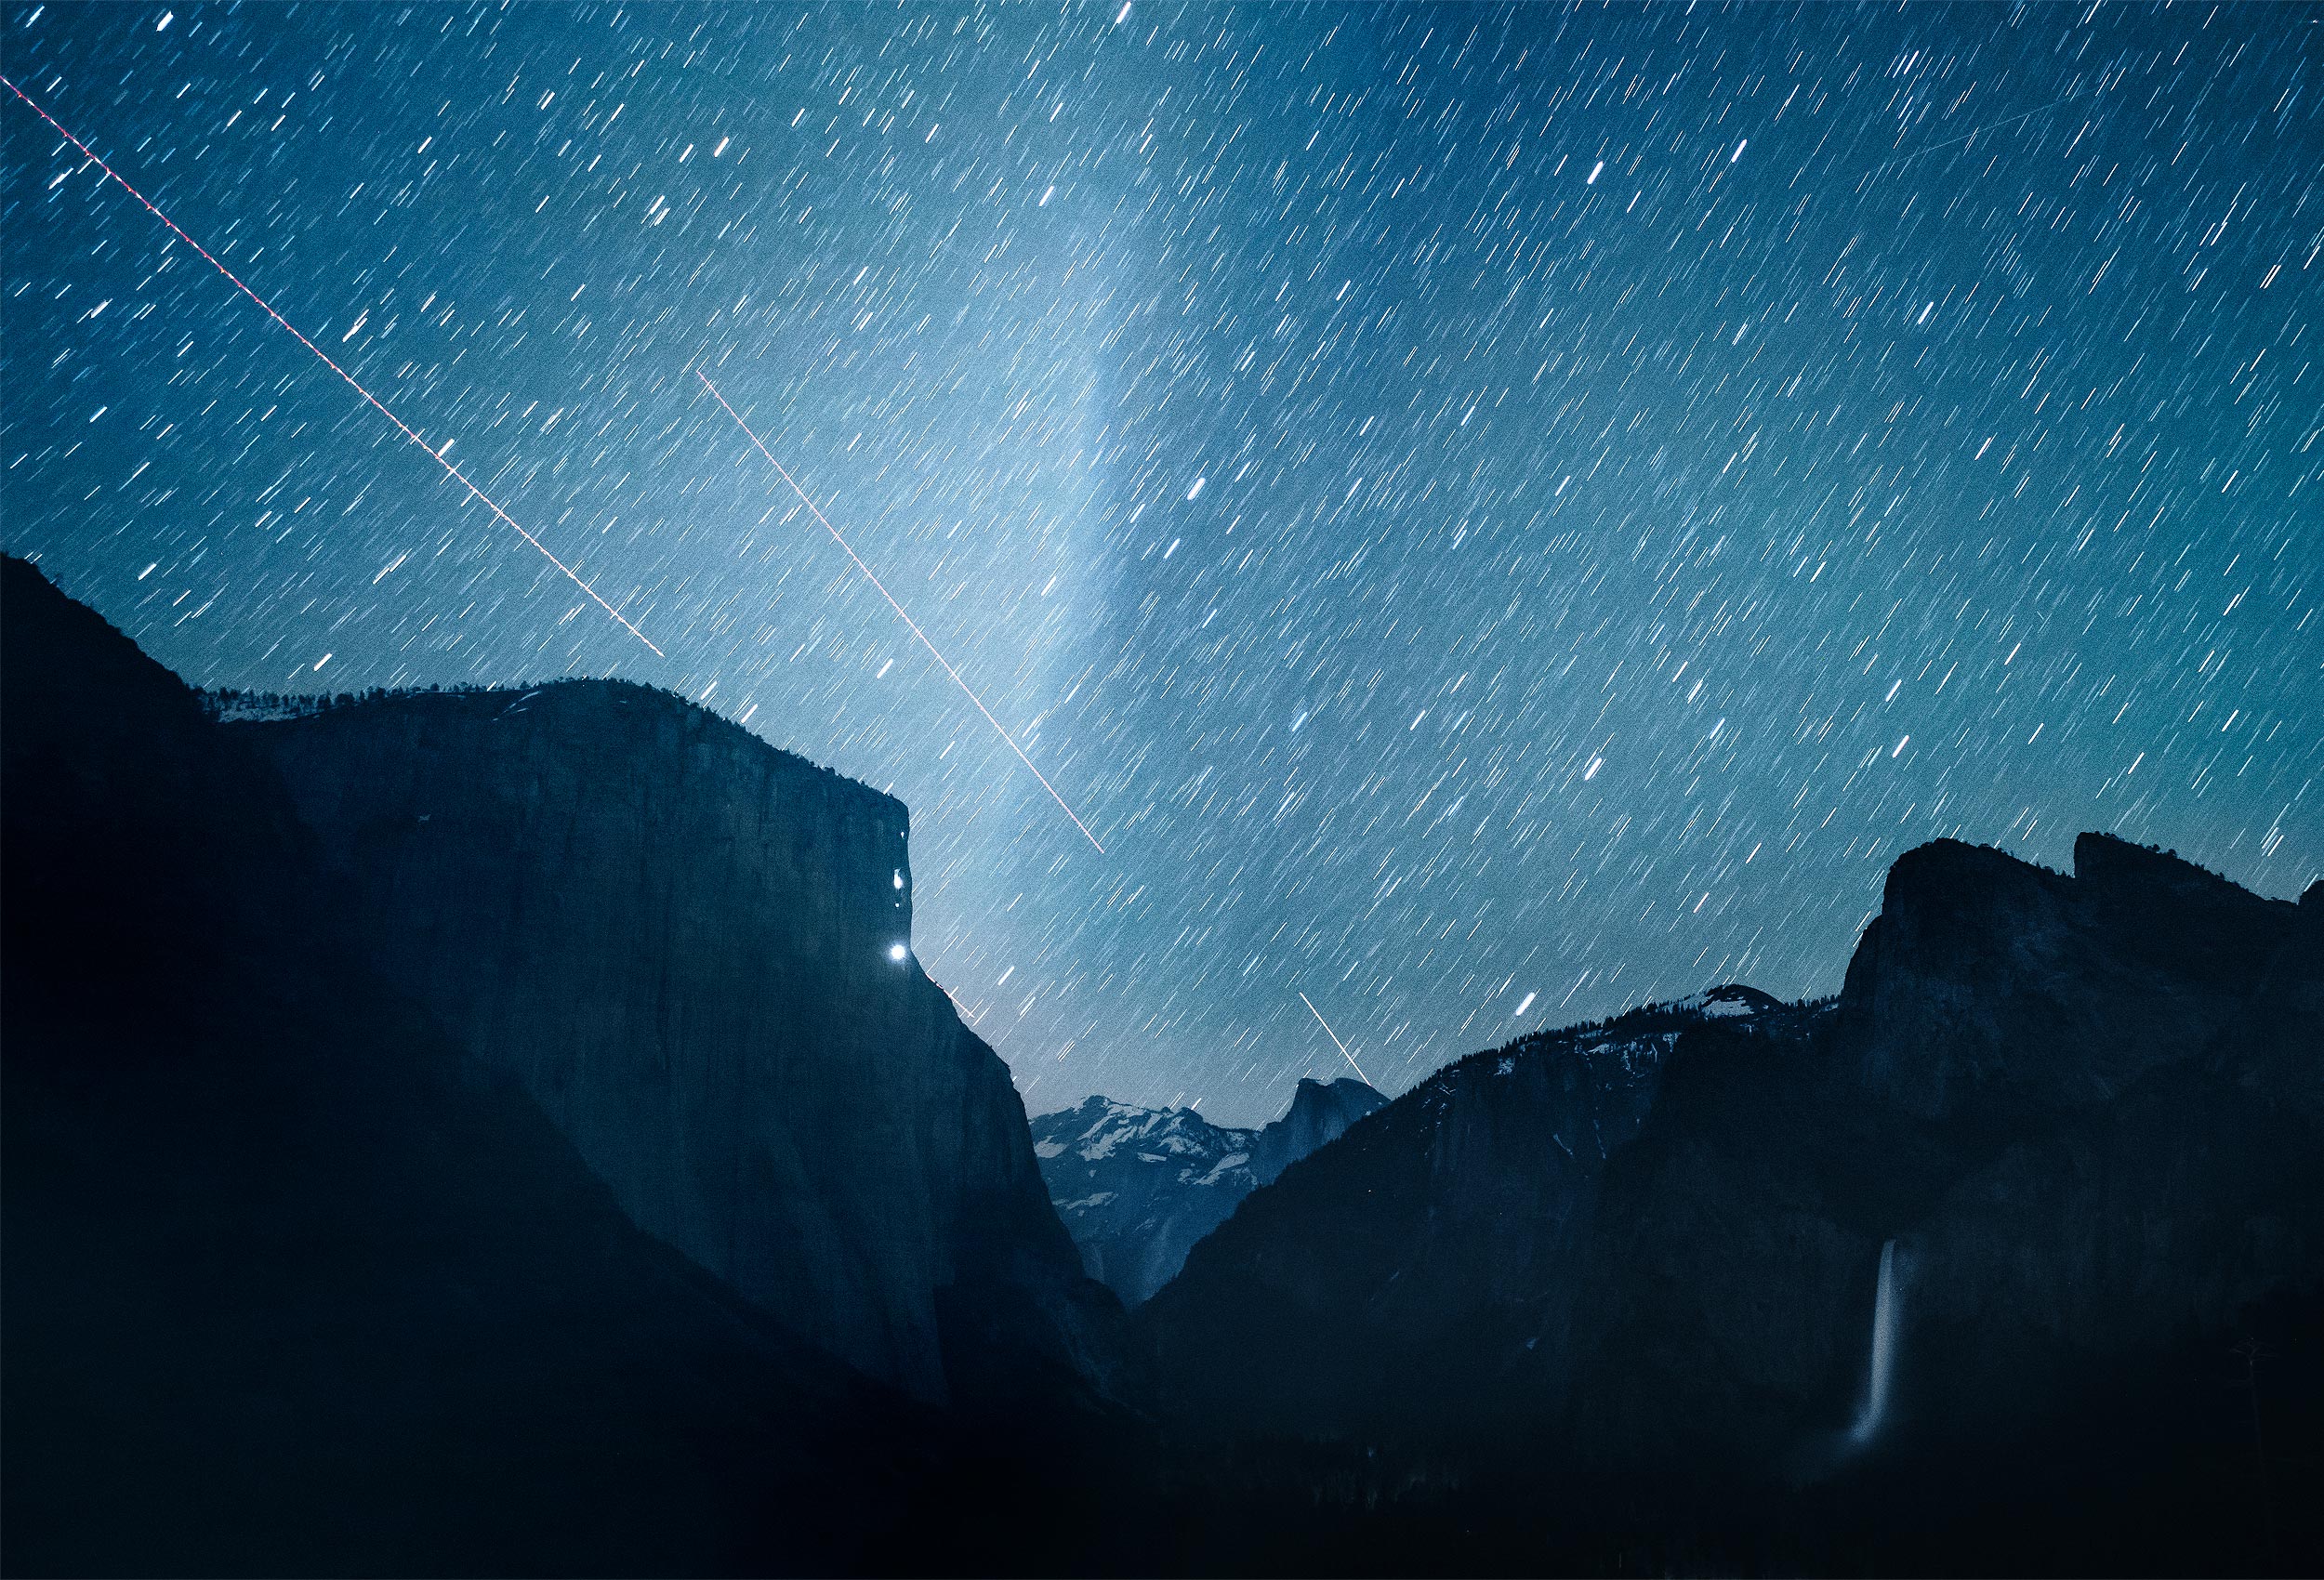 El Capitan at night by landscape photographer Kristopher Grunert